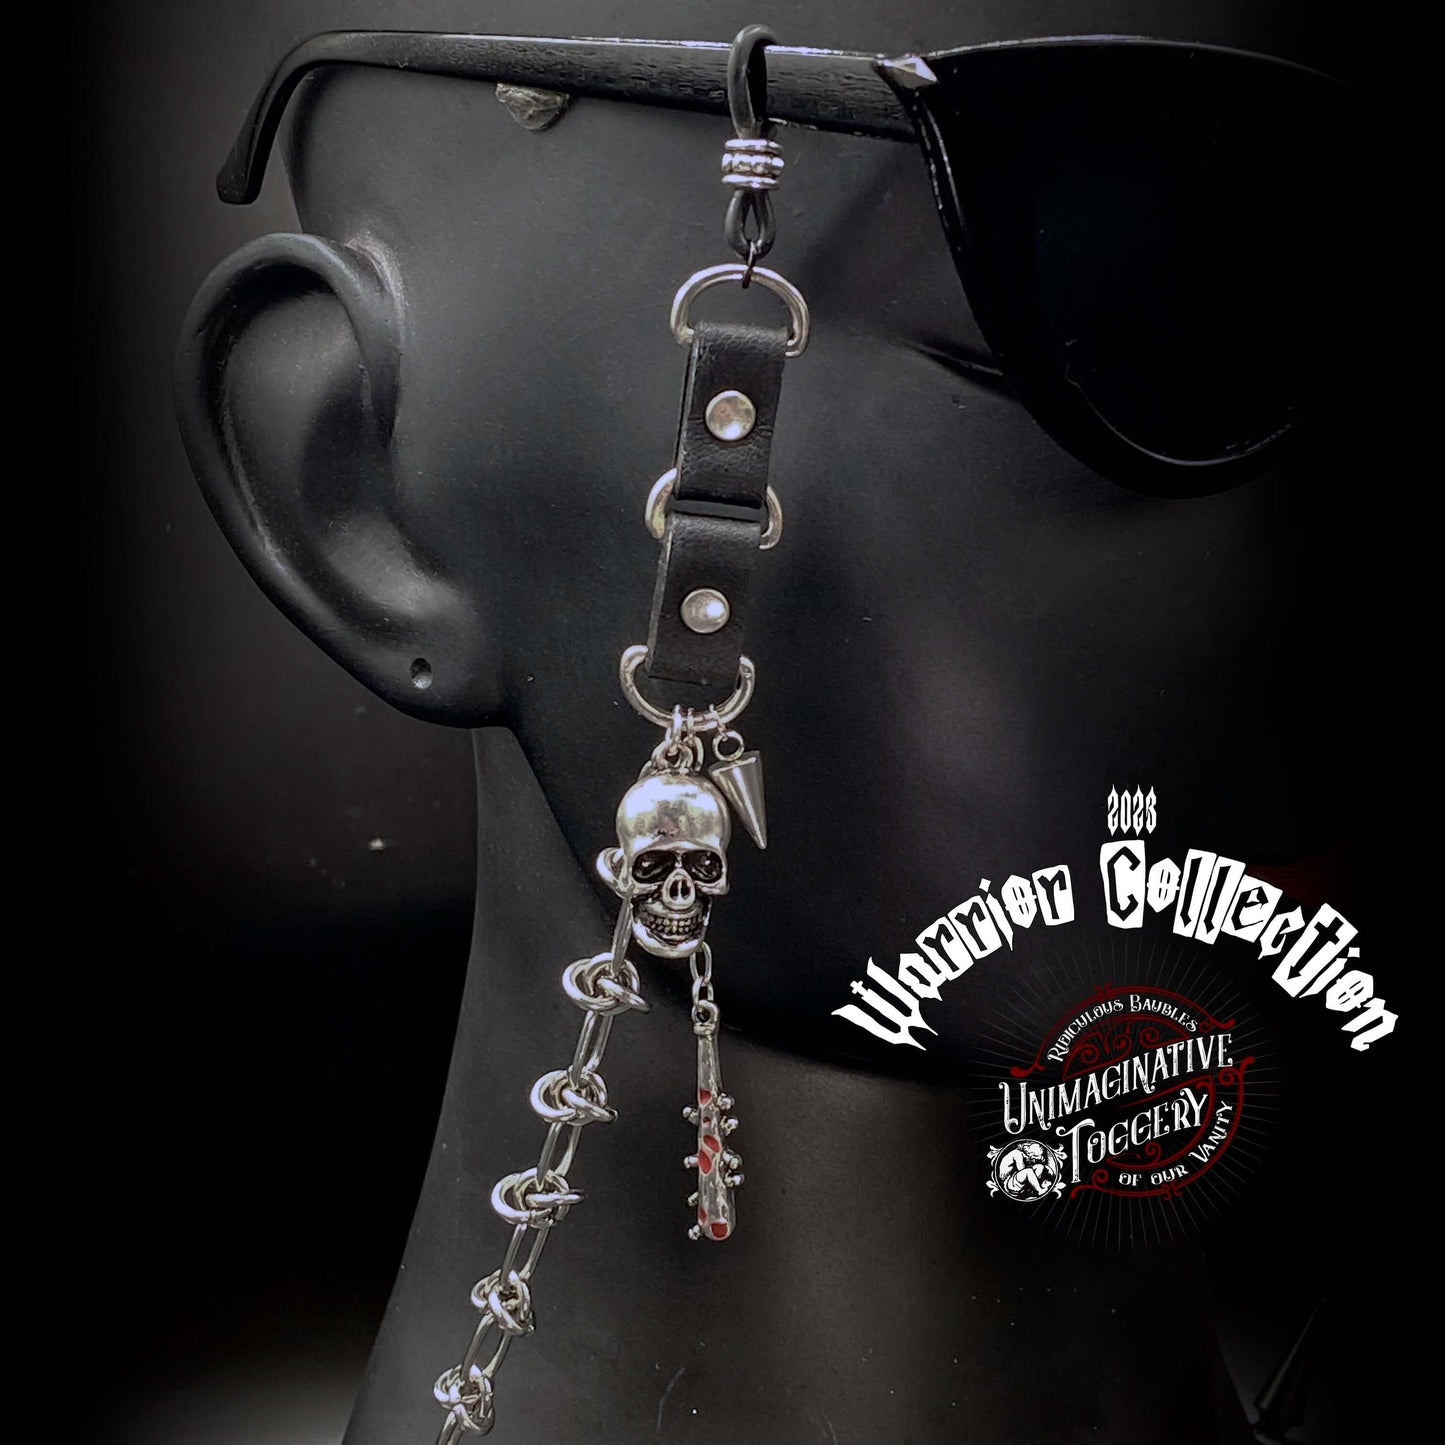 The Death Rocker eyeglass chain